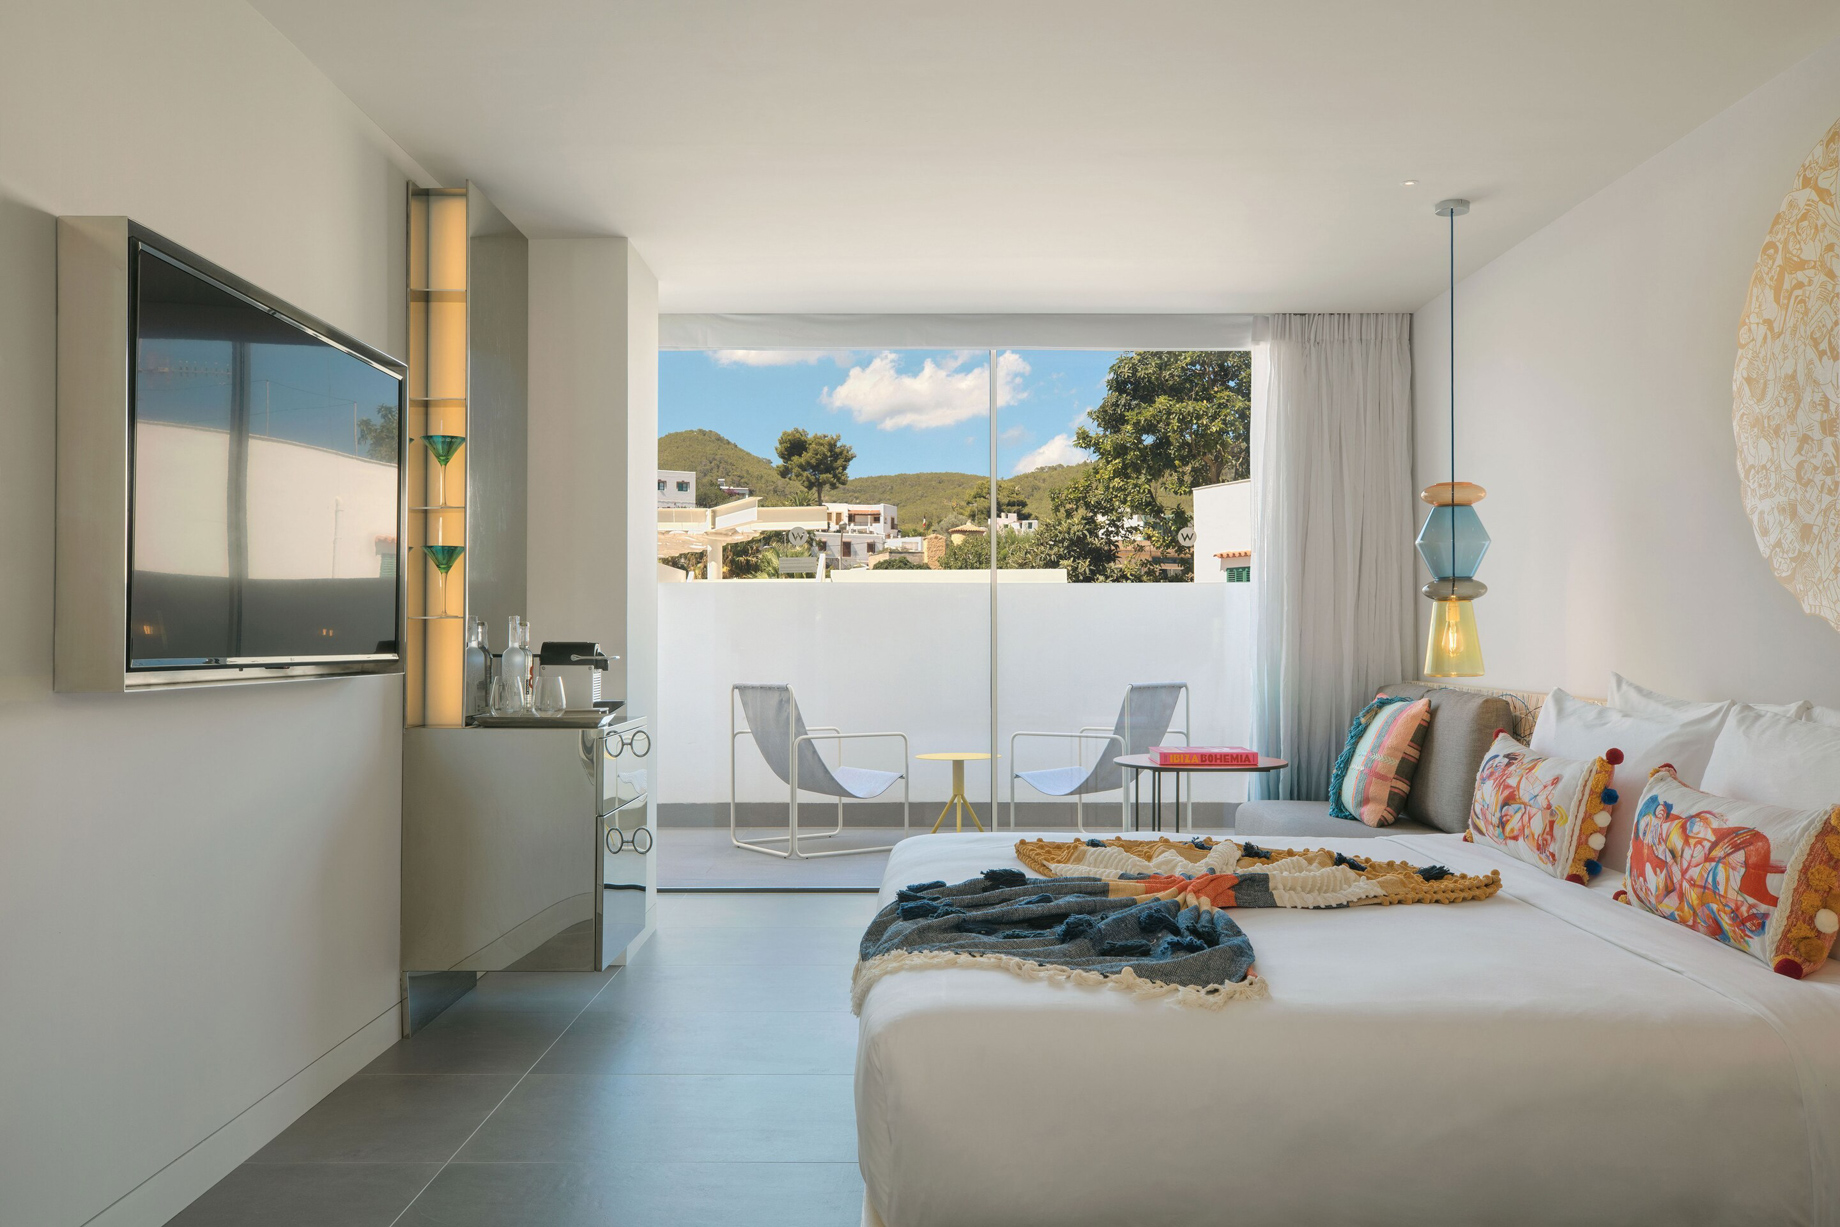 W Ibiza Hotel – Santa Eulalia del Rio, Spain – Wonderful King Guest Room View